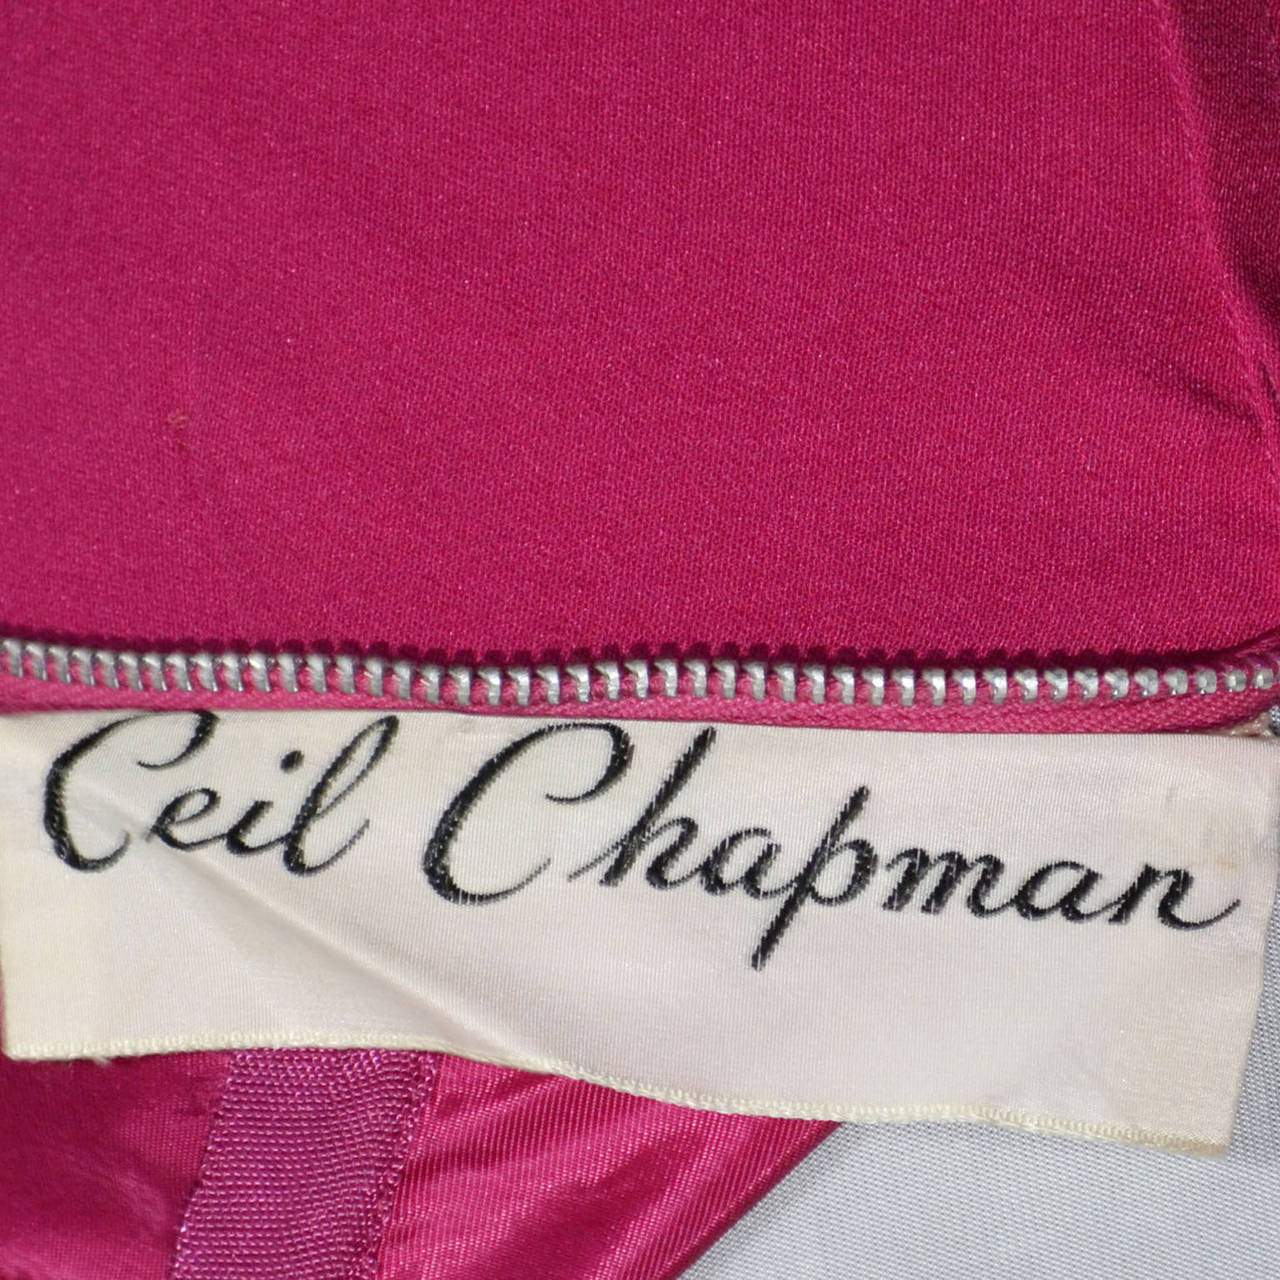 Vintage Ceil Chapman 1950s Pink Silk Chiffon Cocktail Party Dress